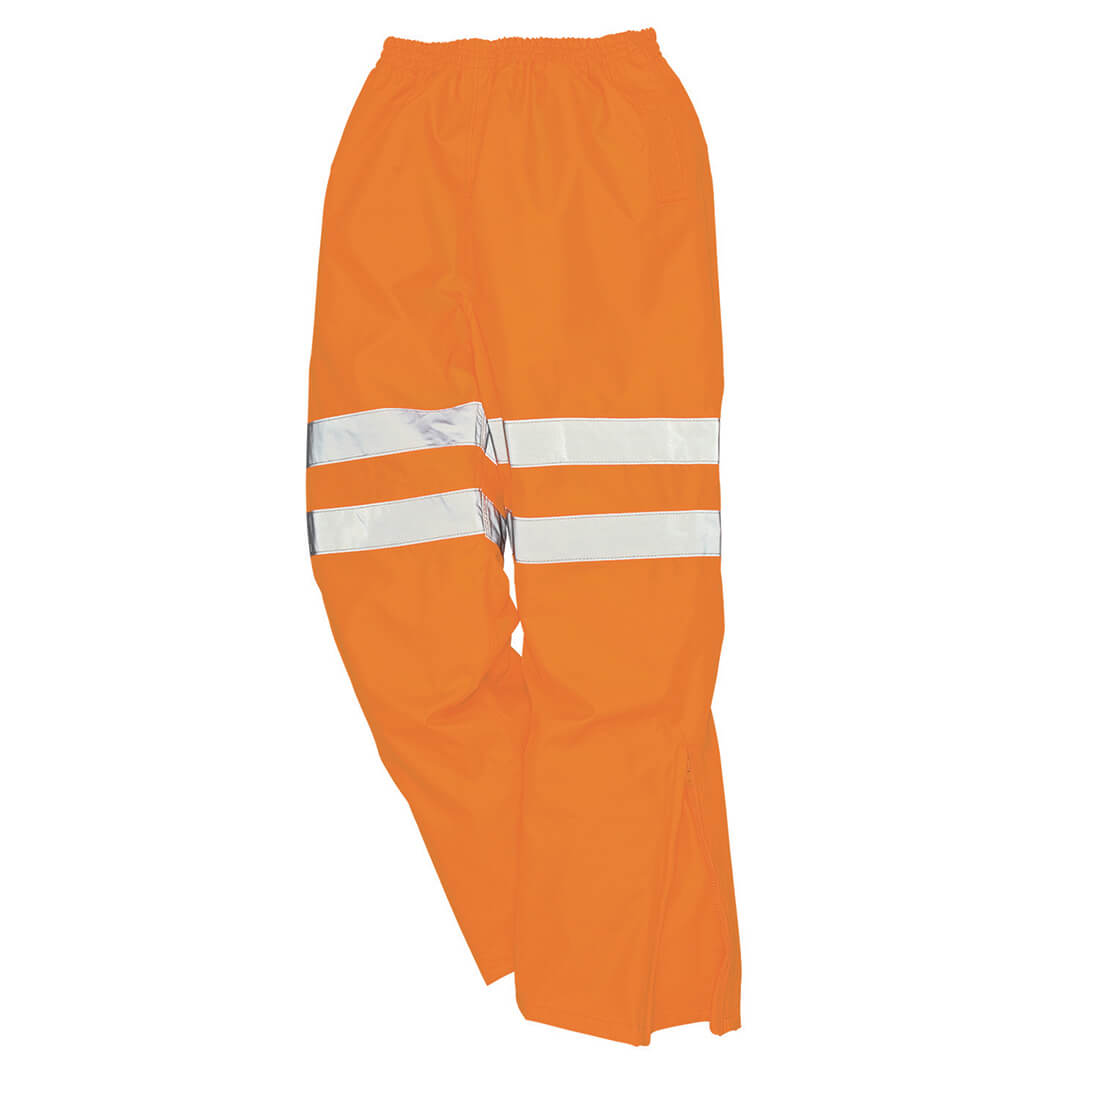 Image of Oxford Weave 300D Class 2 Breathable Hi Vis Breathable Trousers Orange 4XL